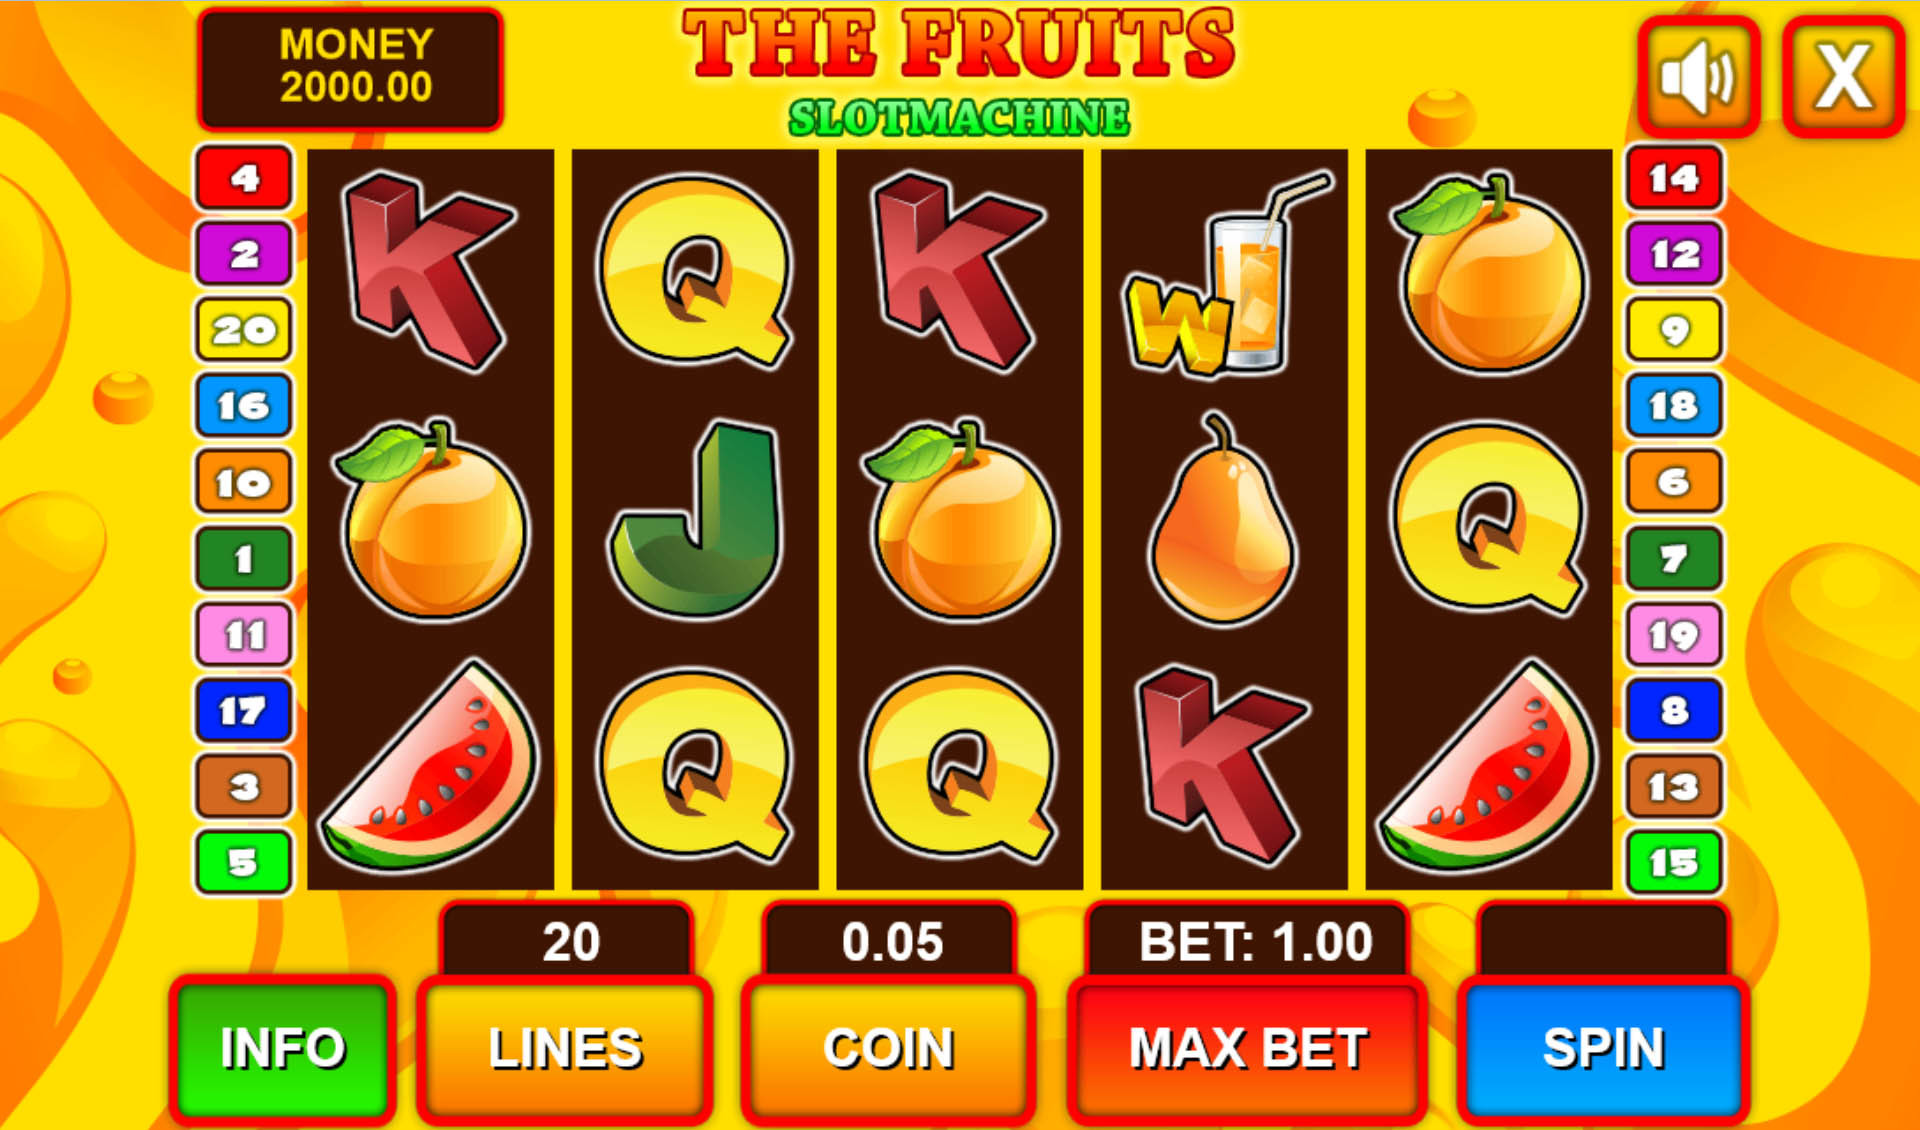 feelinu0027 fruity 10 slot machines online to play